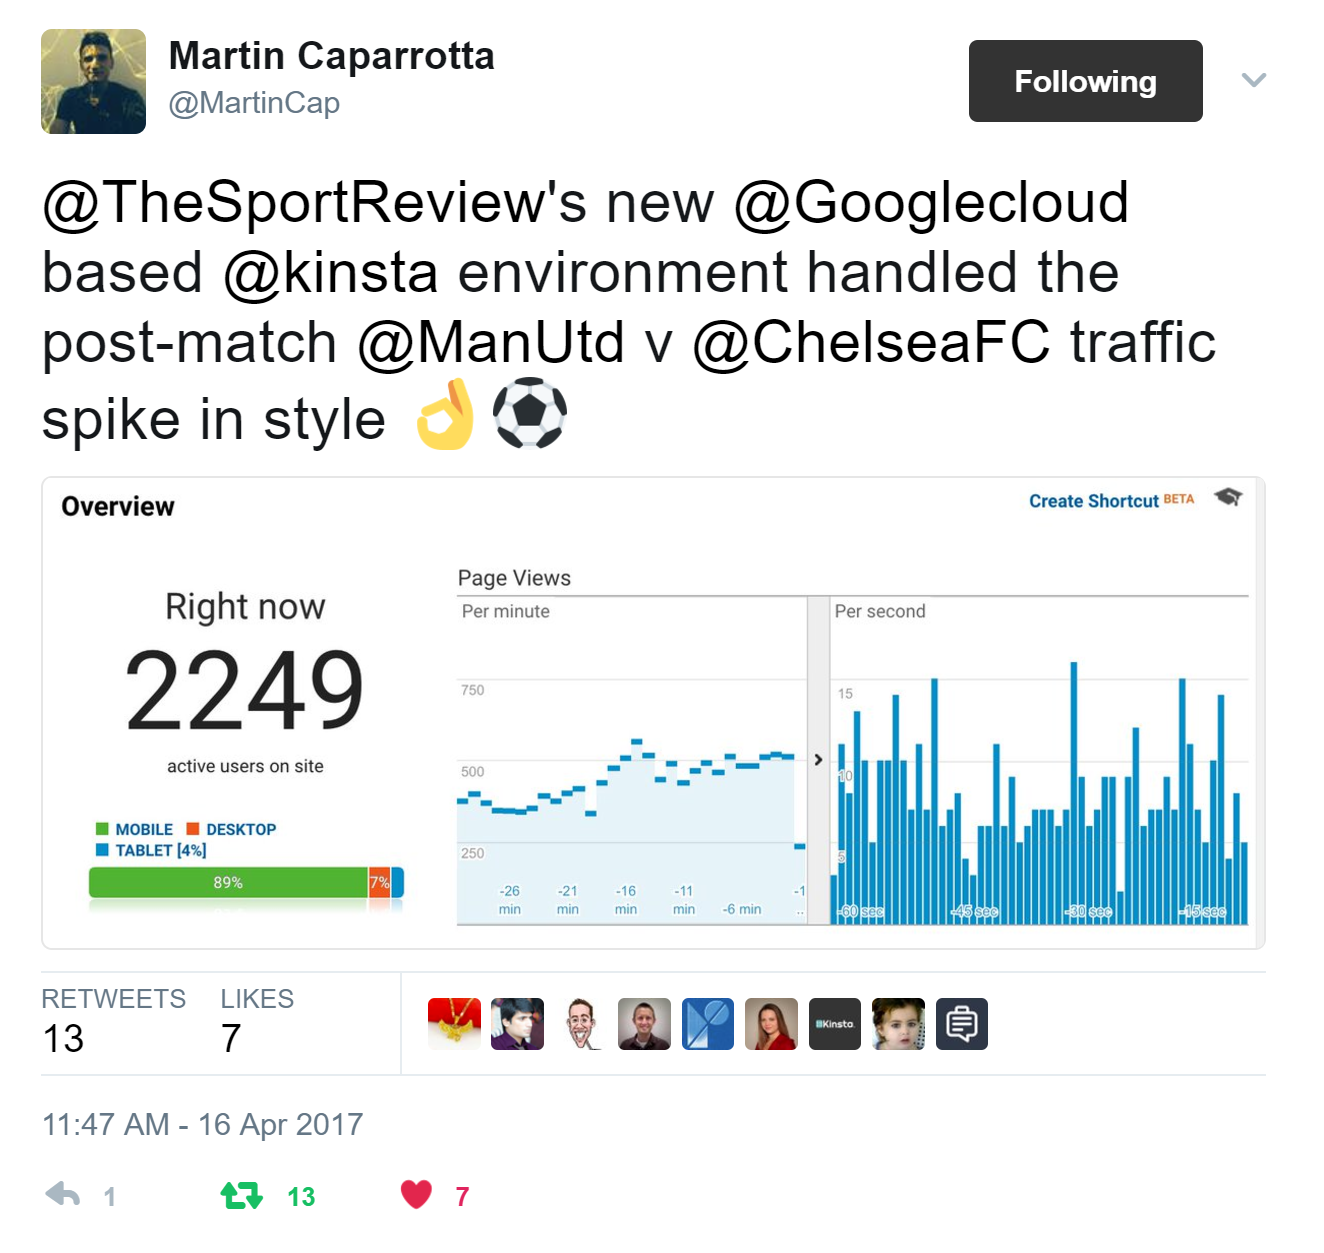 Martin Caparrotta tweet